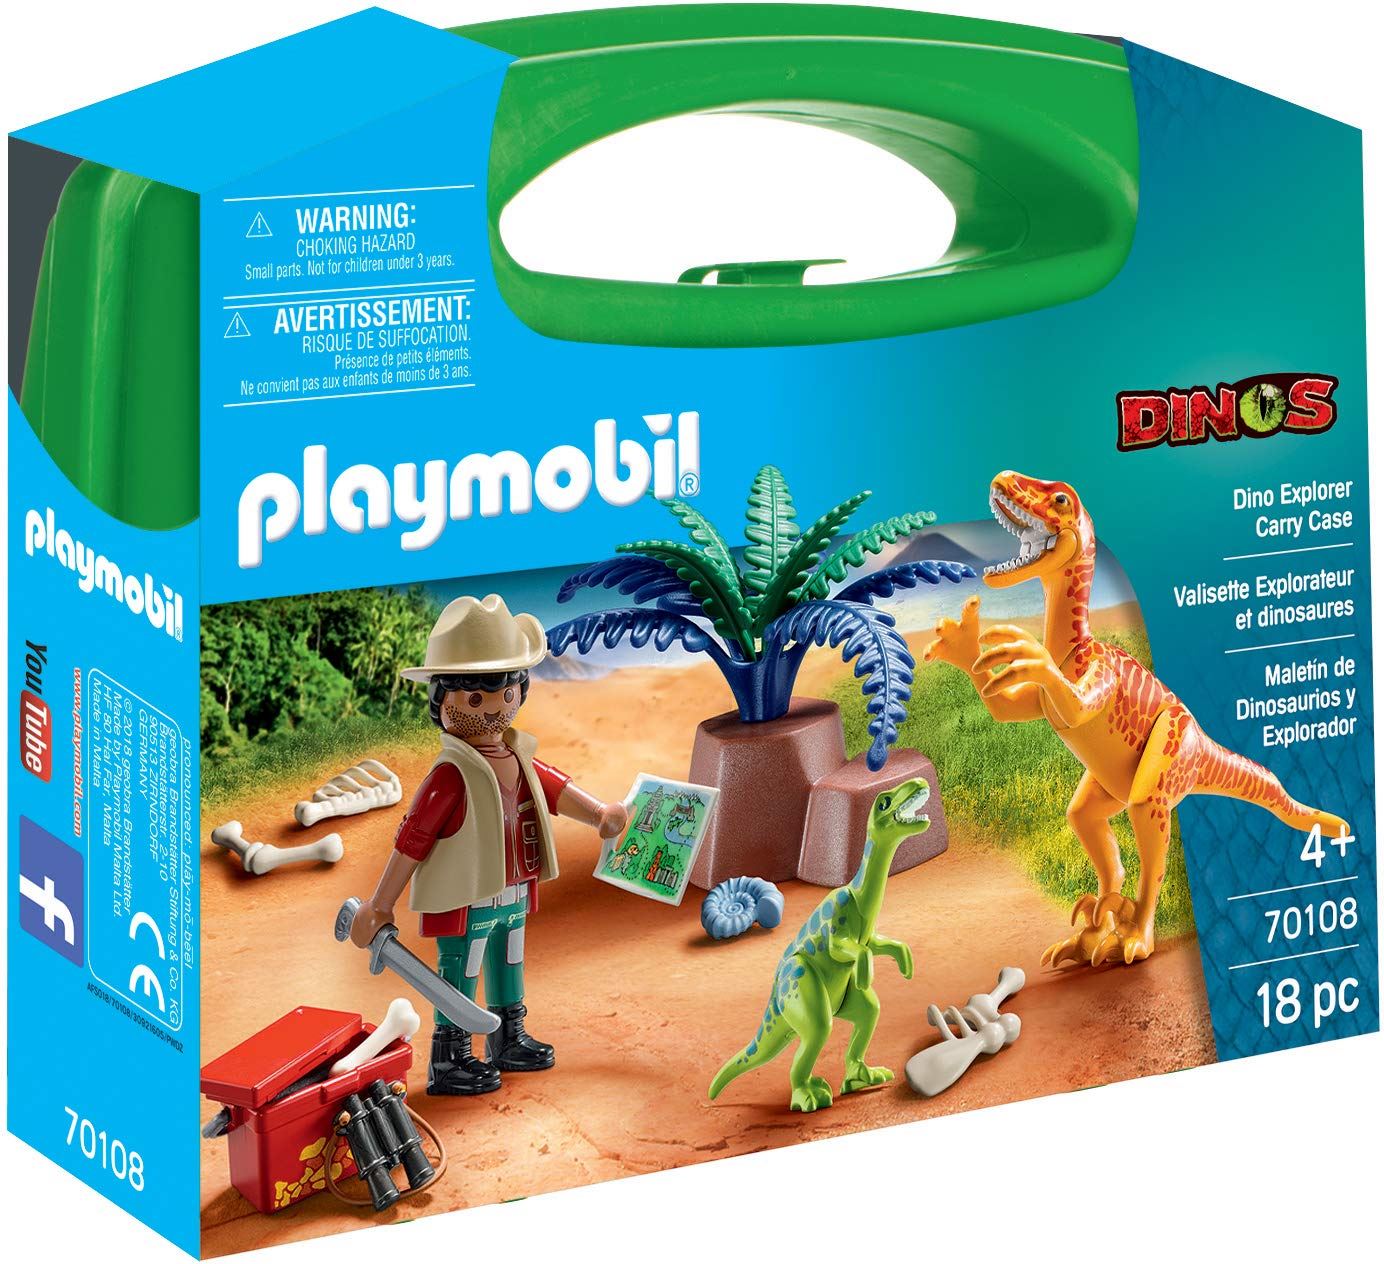 Playmobil Dinos 70108 Dino Explorer Carry Case